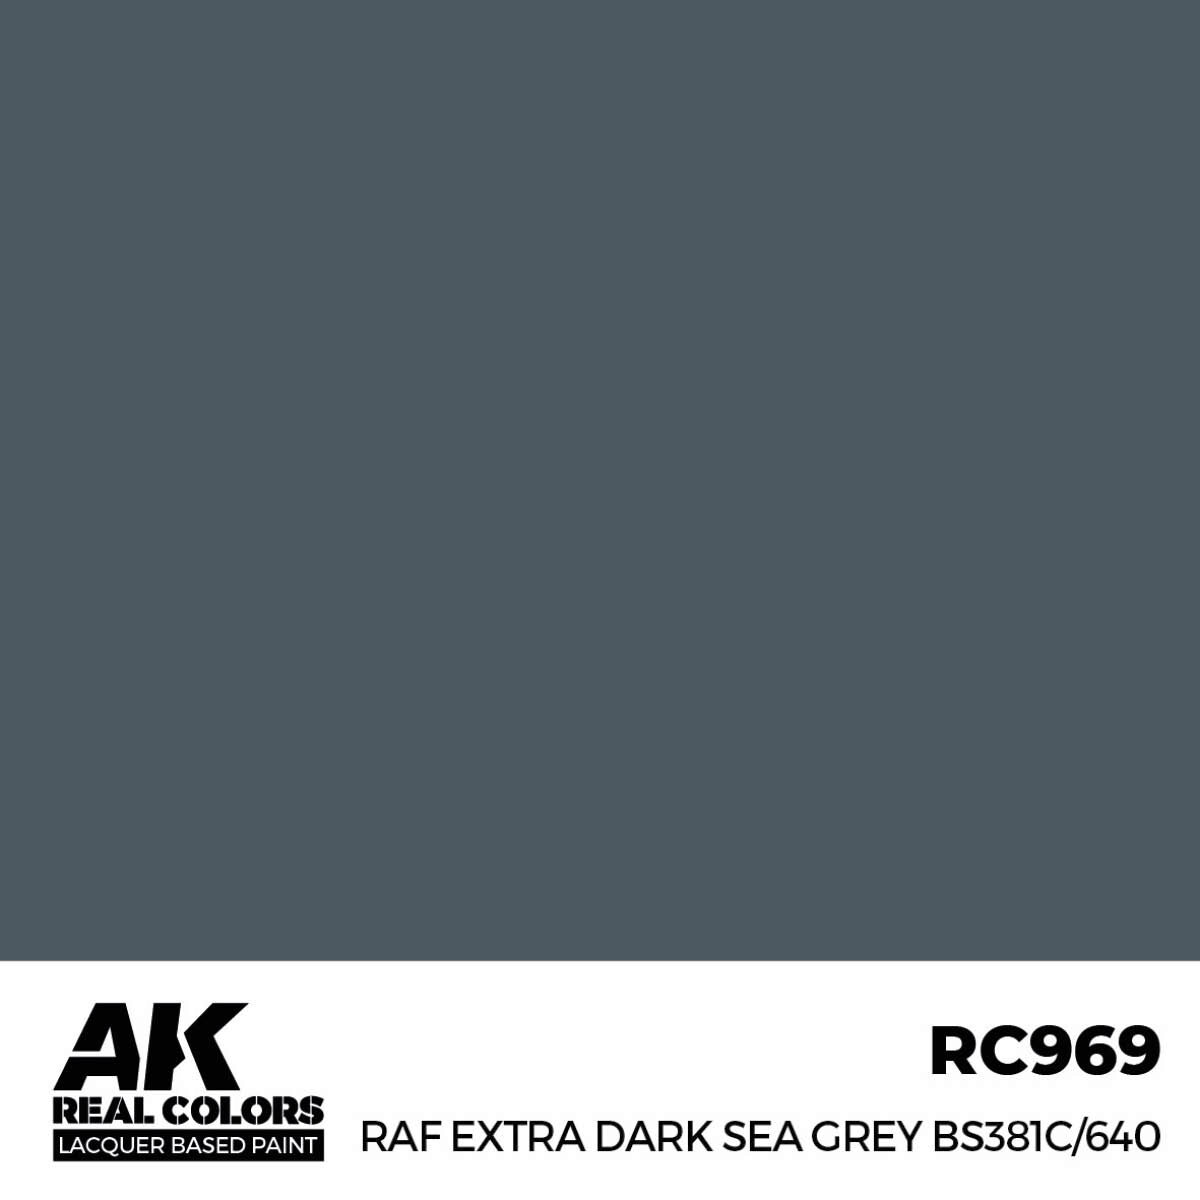 AK RC969 Real Colors RAF Extra Dark Sea Grey BS381C/640 17 ml.